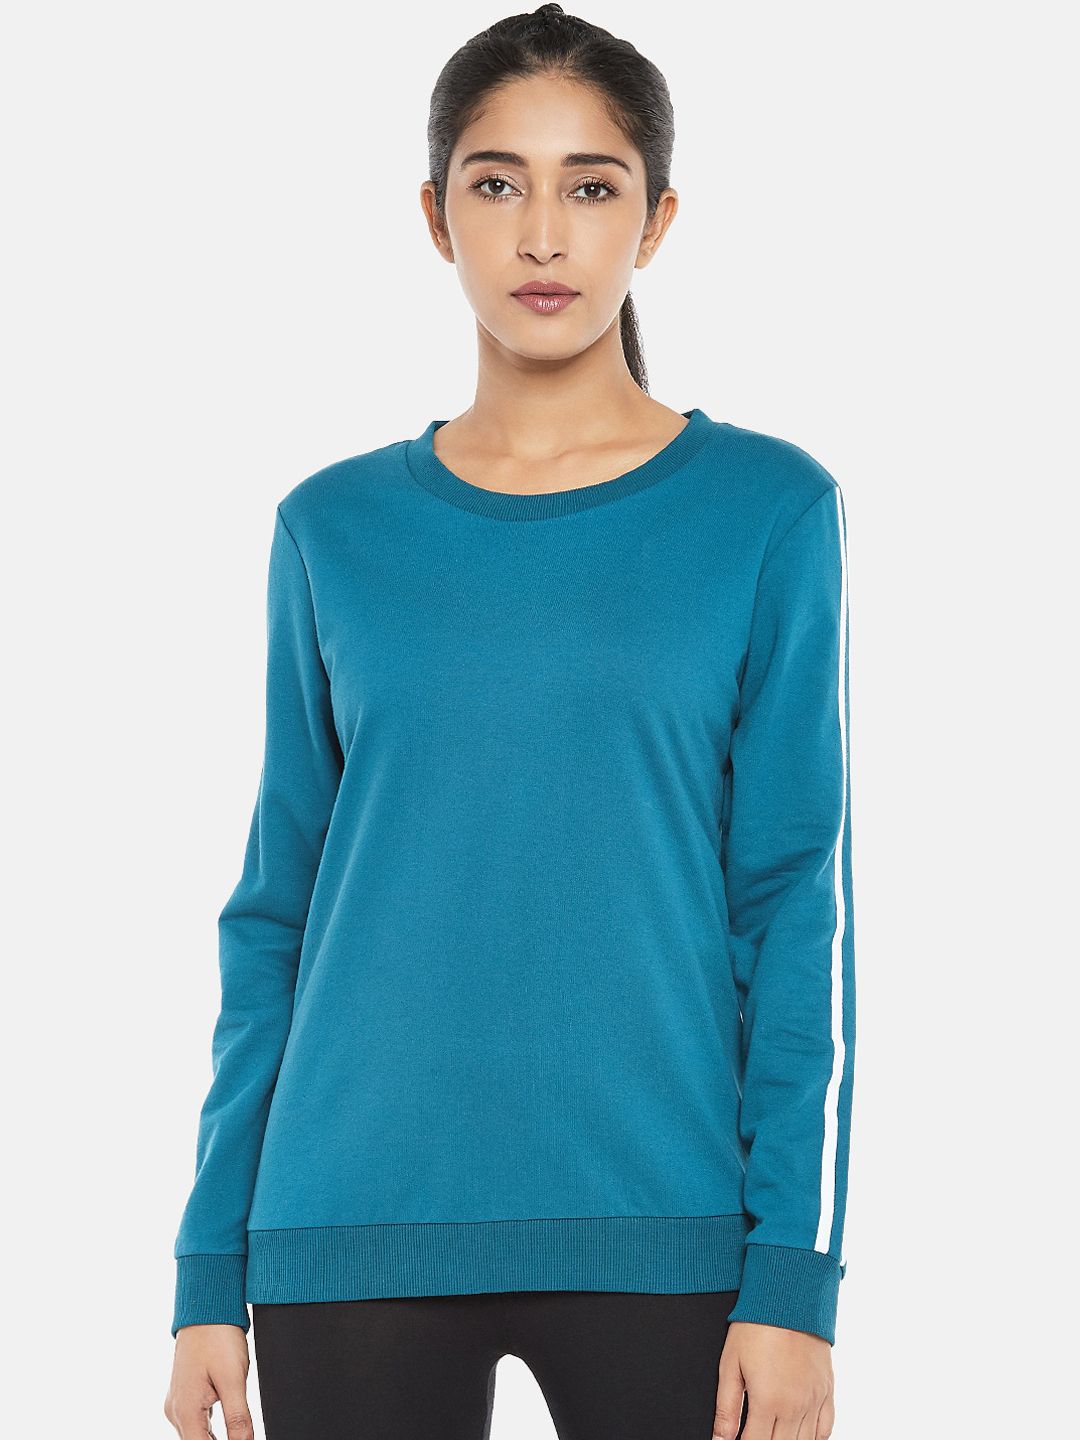 Ajile by Pantaloons Women Teal Blue Solid Sweatshirt Price in India